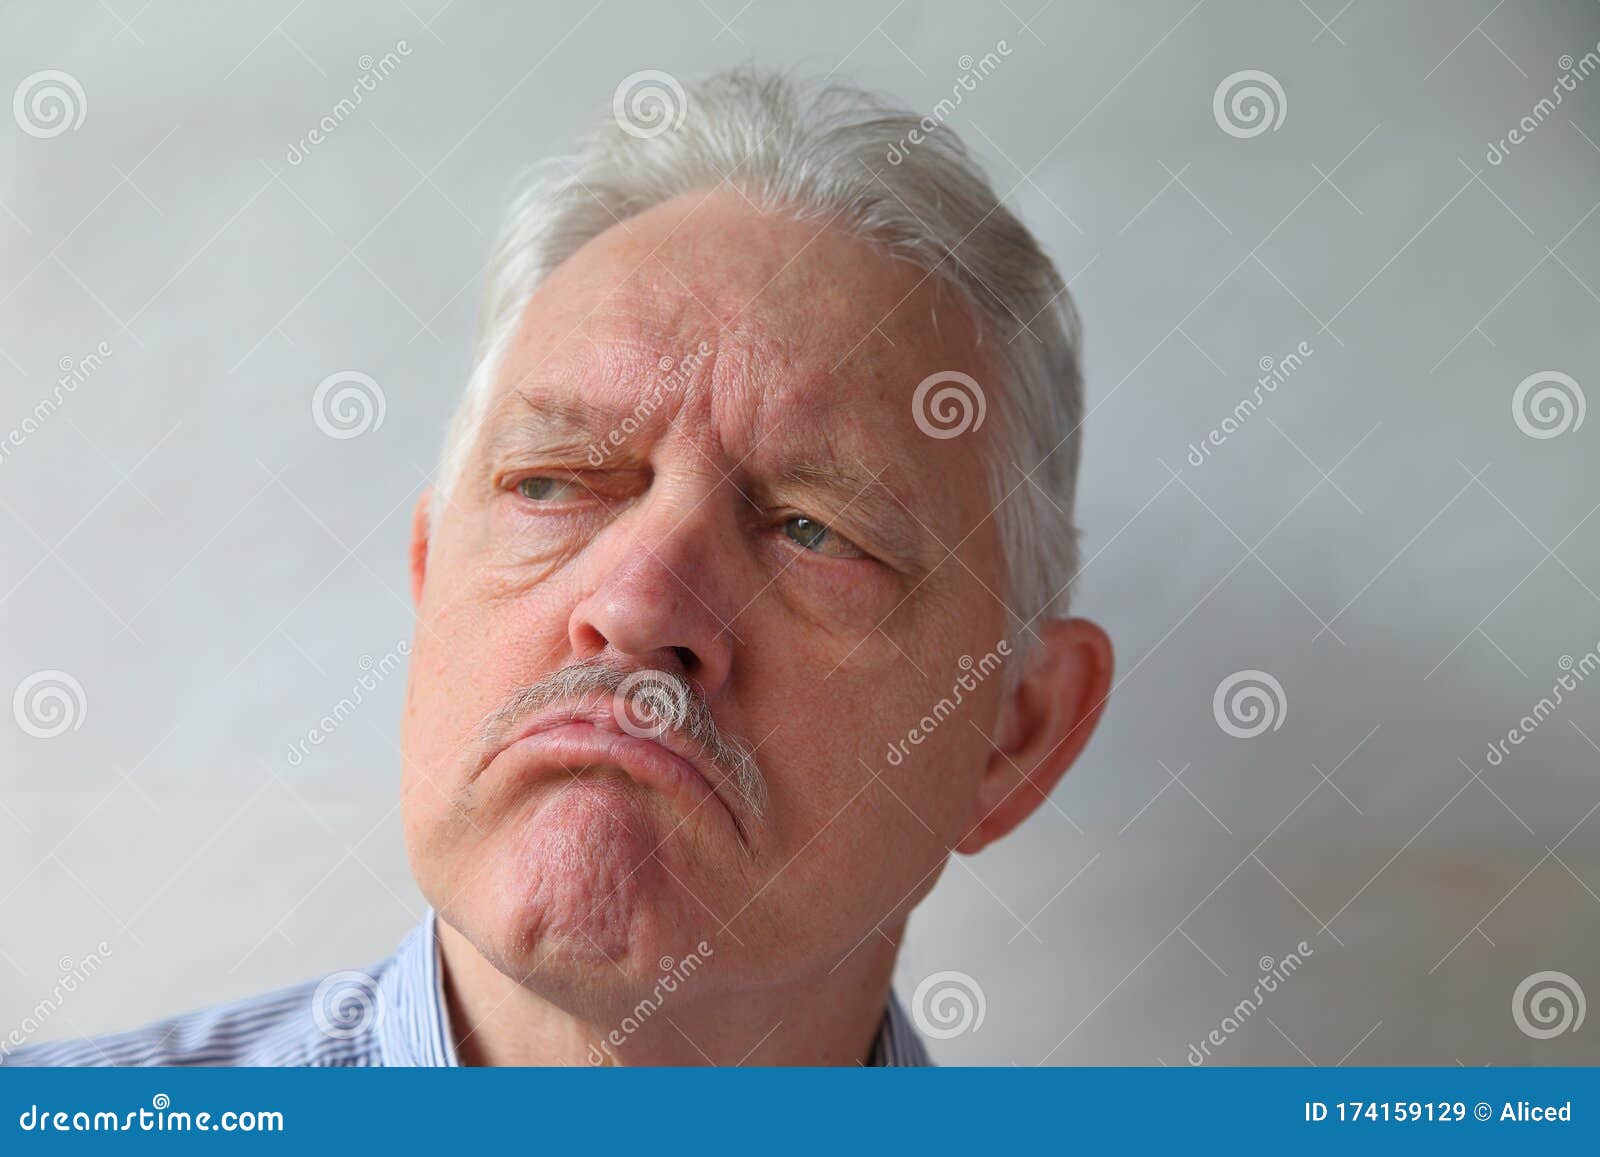 Disappointed senior man stock image. Image of sadness - 174159129